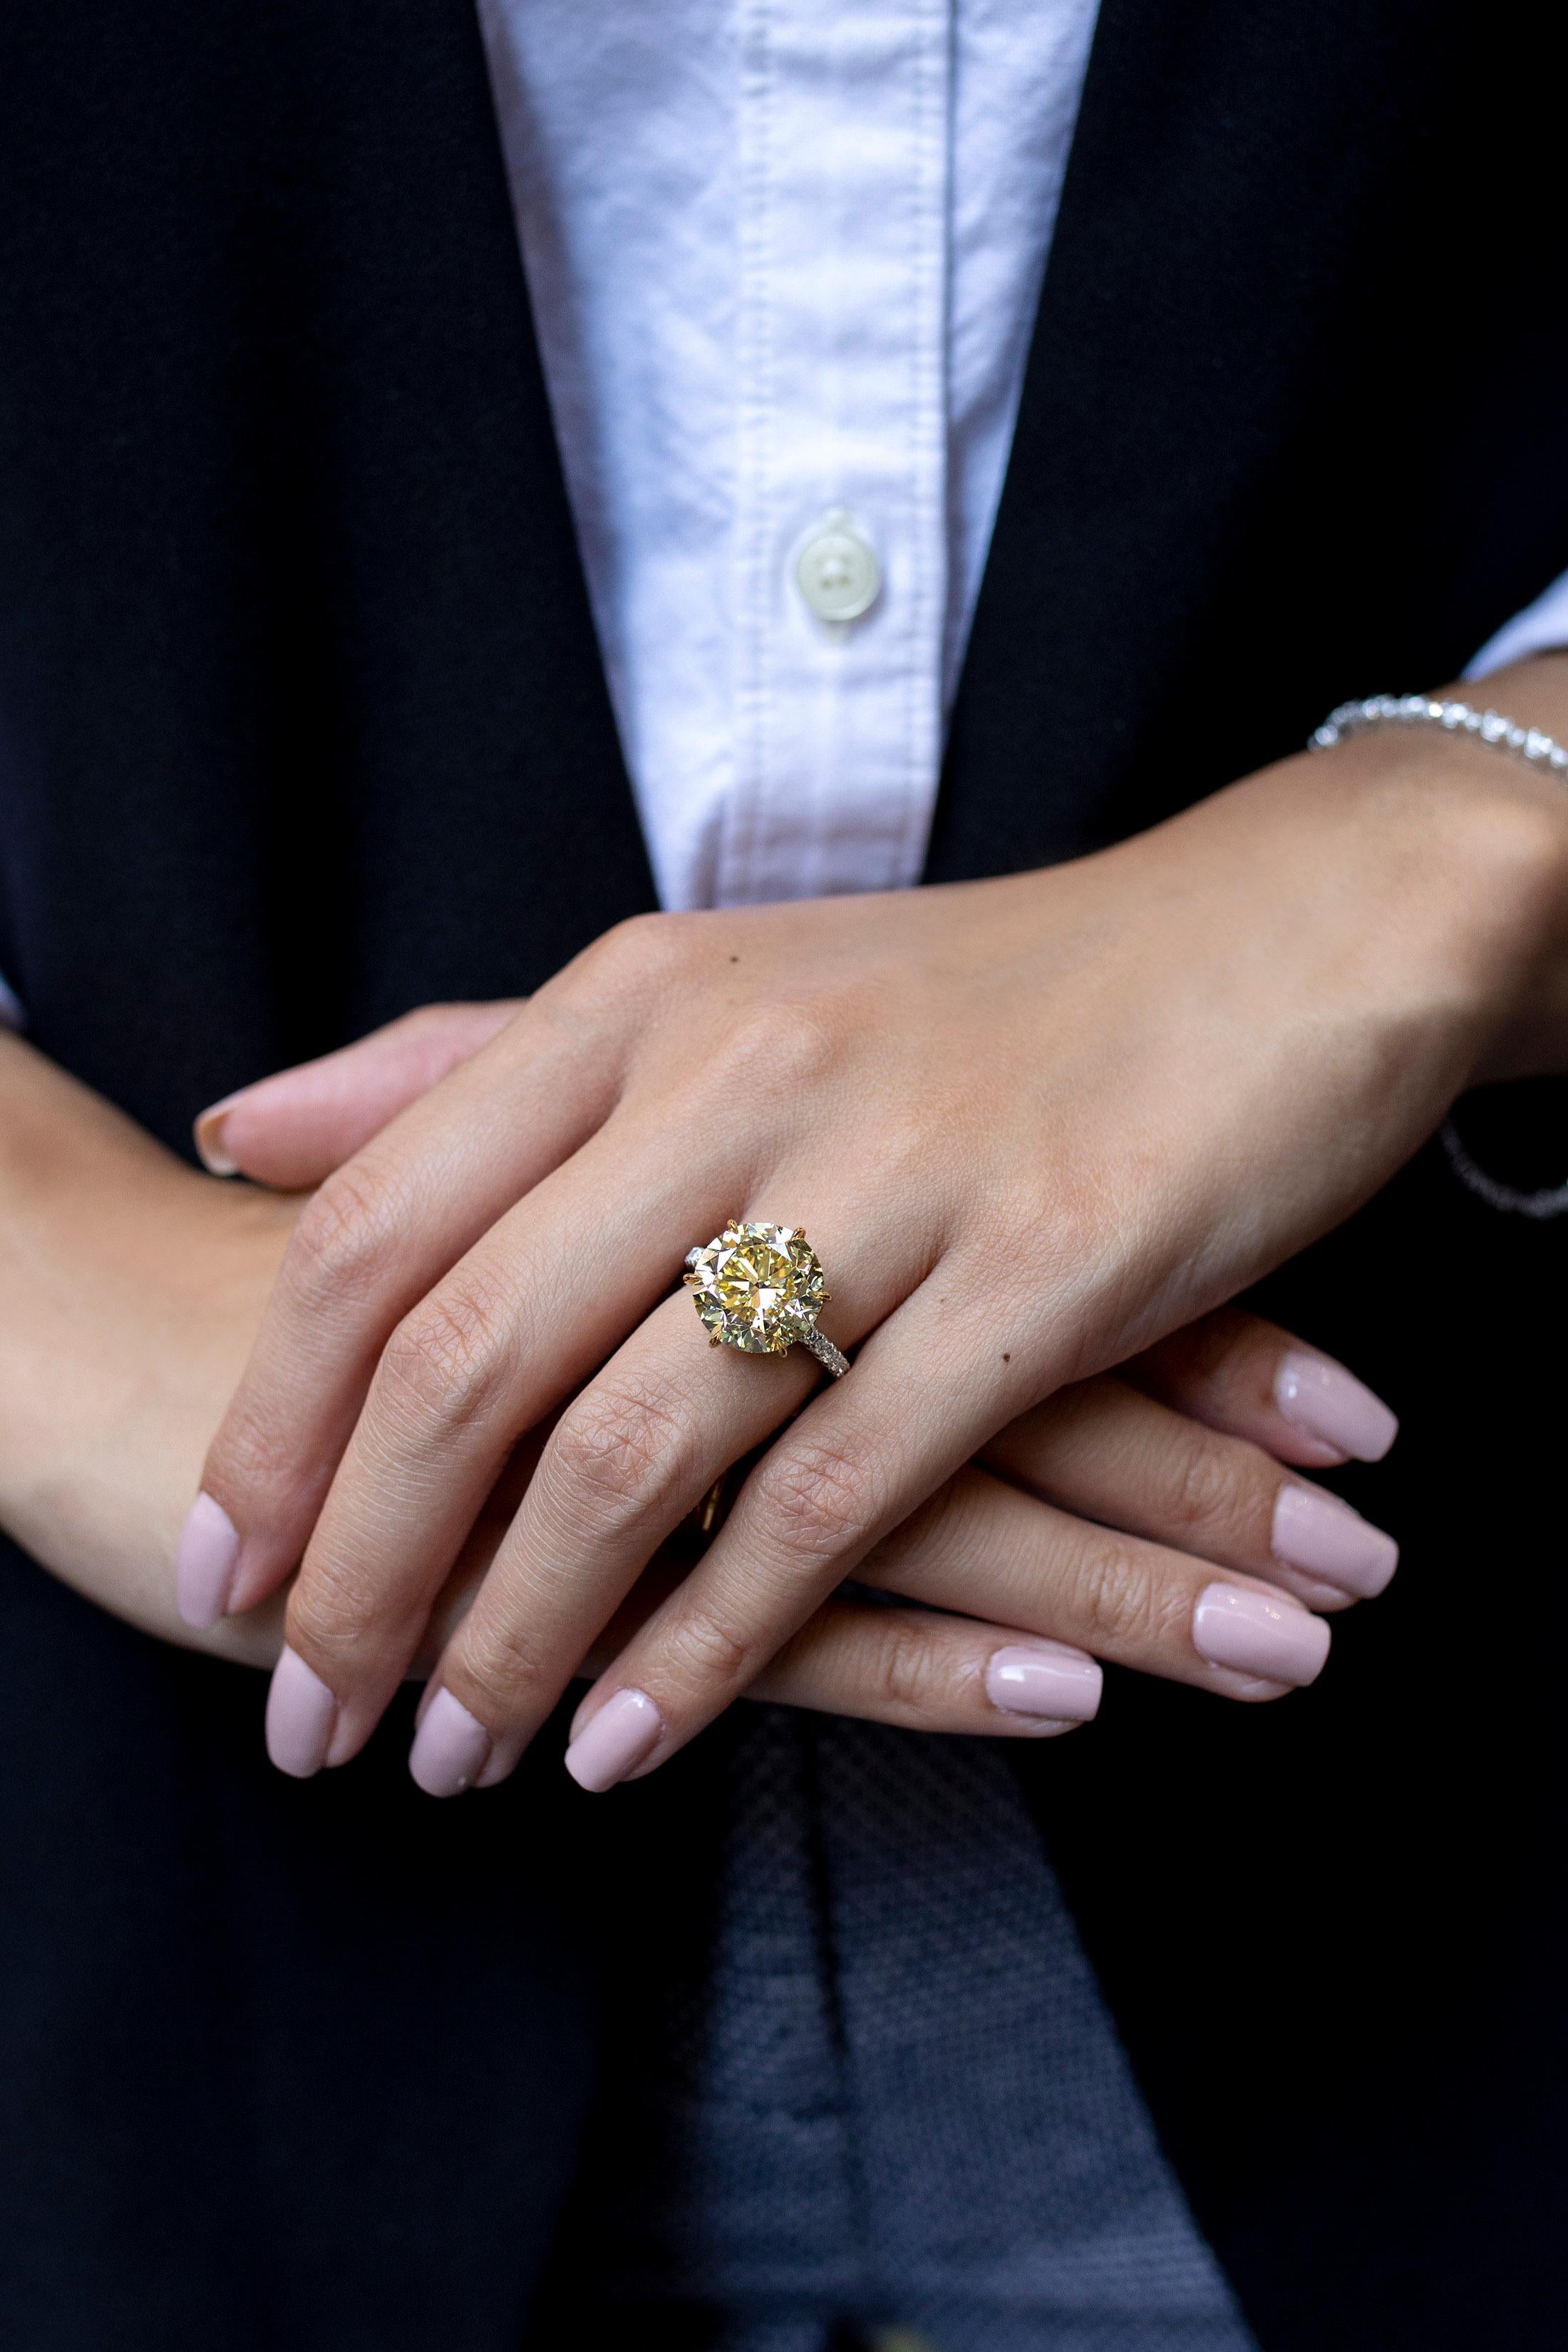 De las mujeres Roman Malakov Anillo de compromiso de diamantes amarillos intensos con certificación GIA en venta